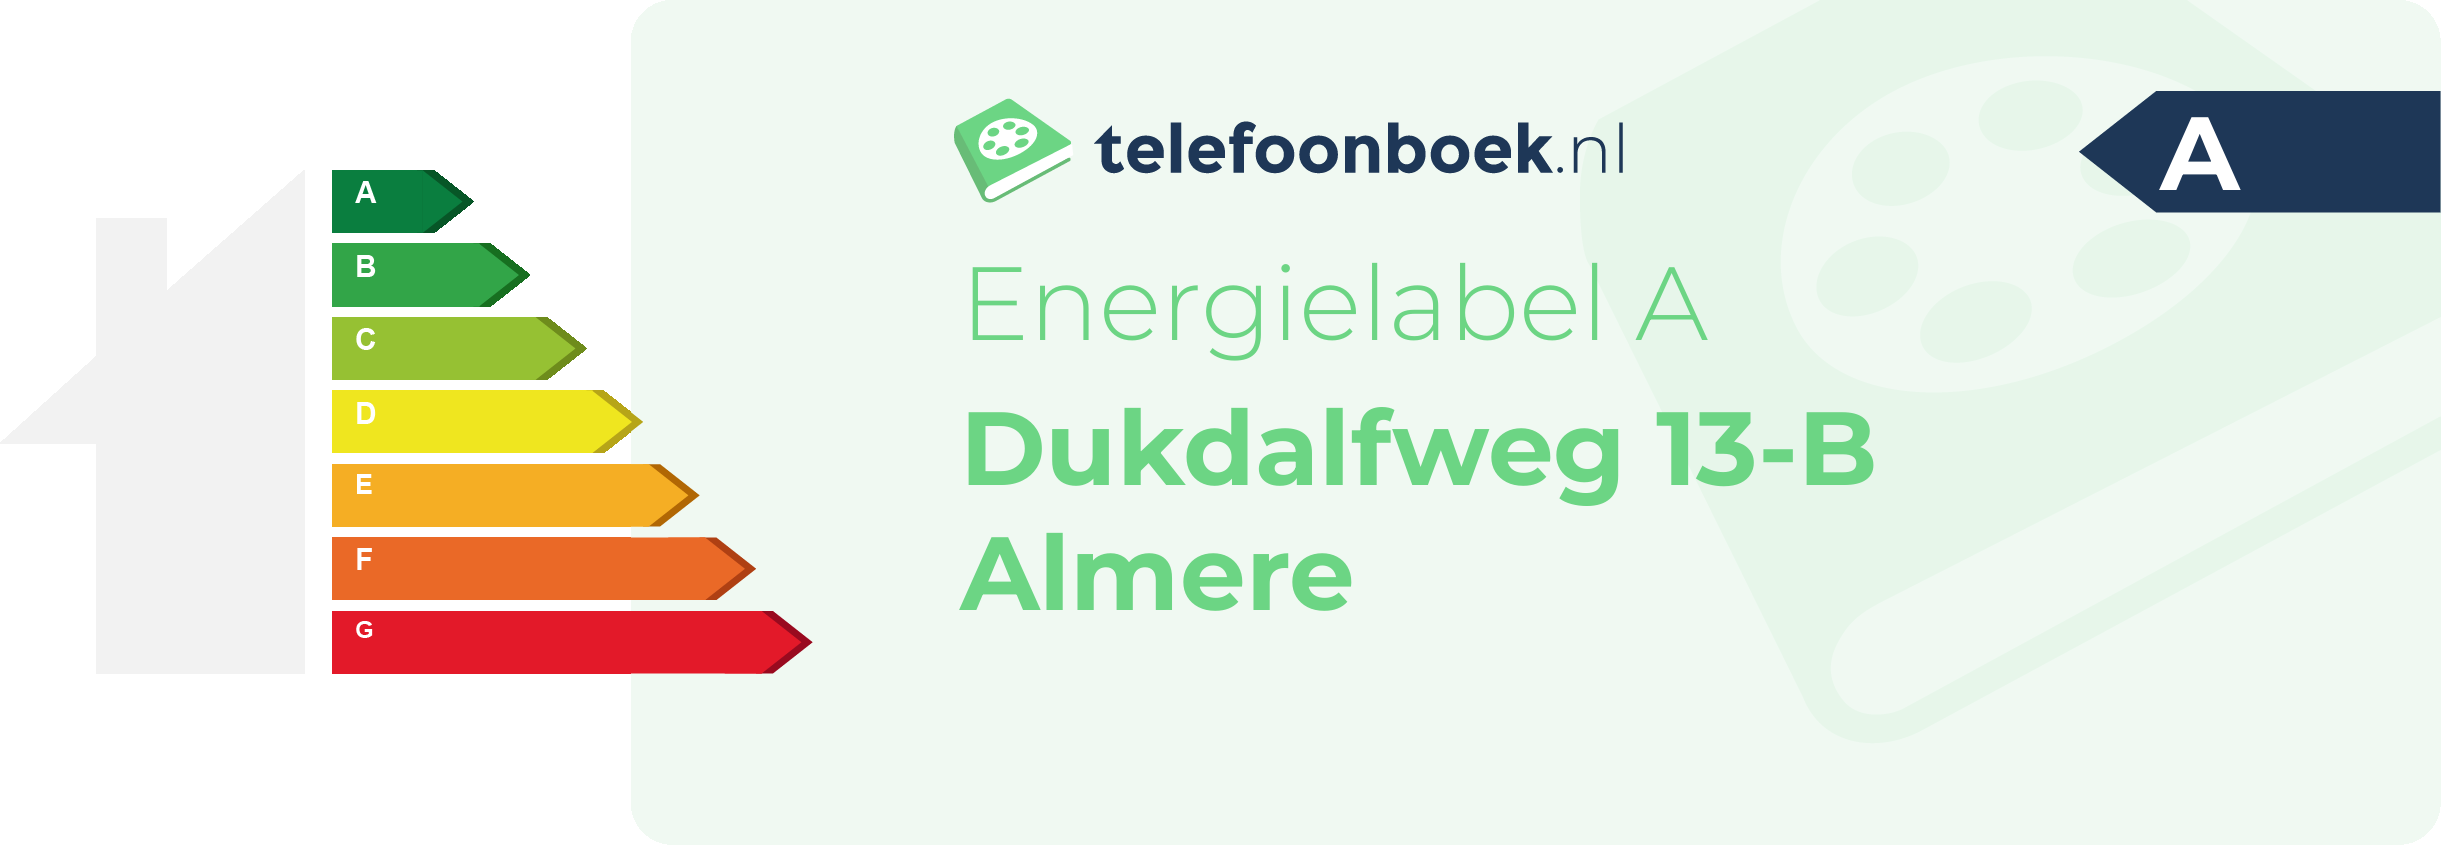 Energielabel Dukdalfweg 13-B Almere